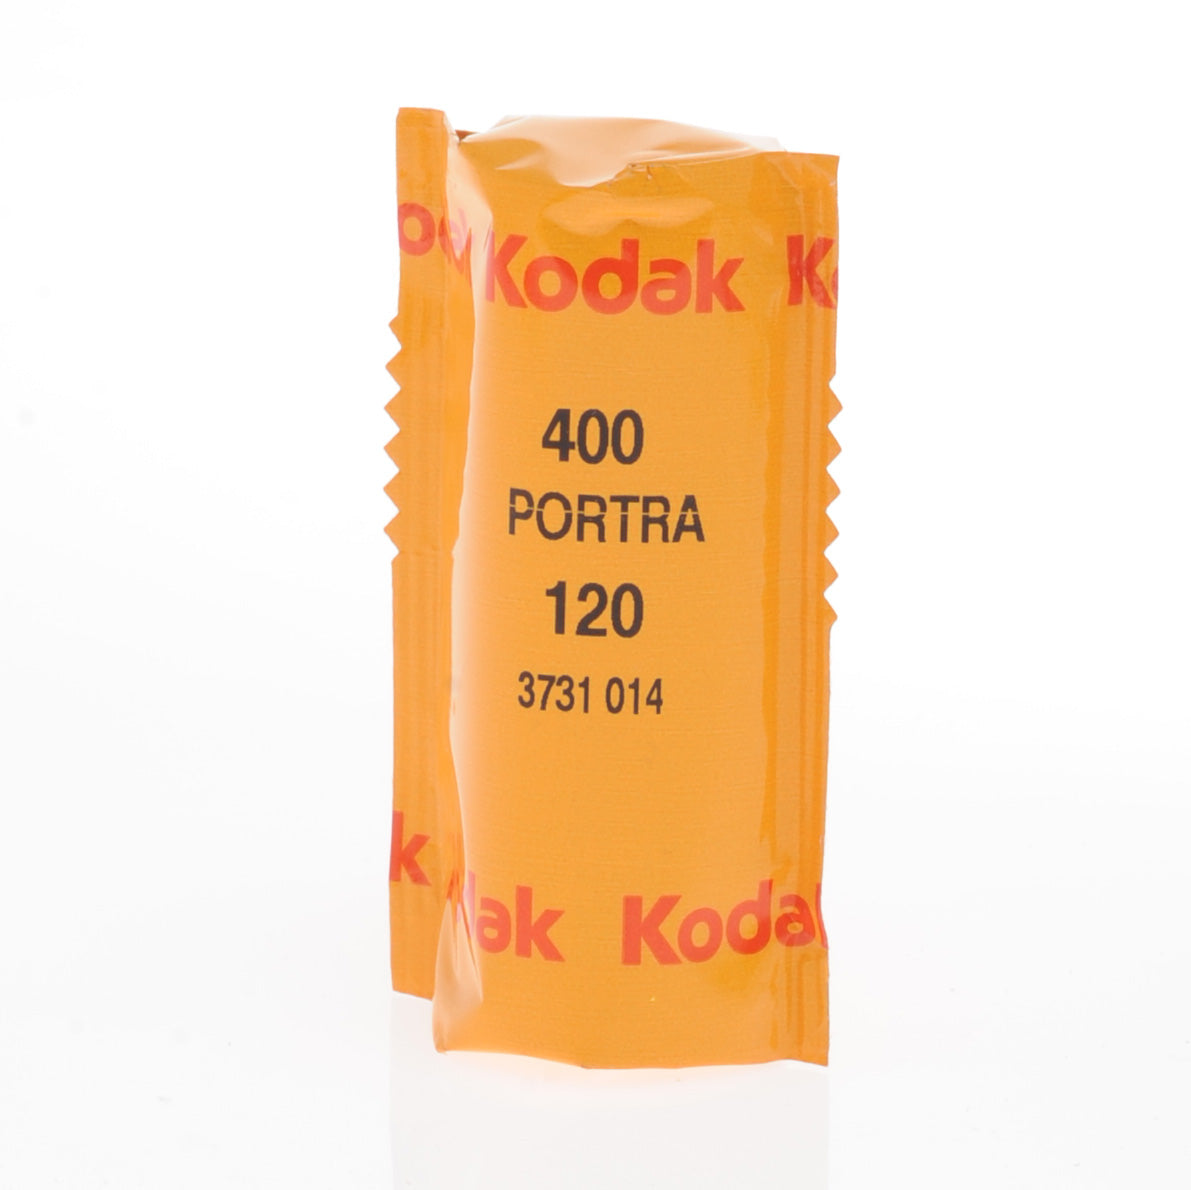 Kodak Professional Portra 400 Color Negative Film One Roll 120 Film